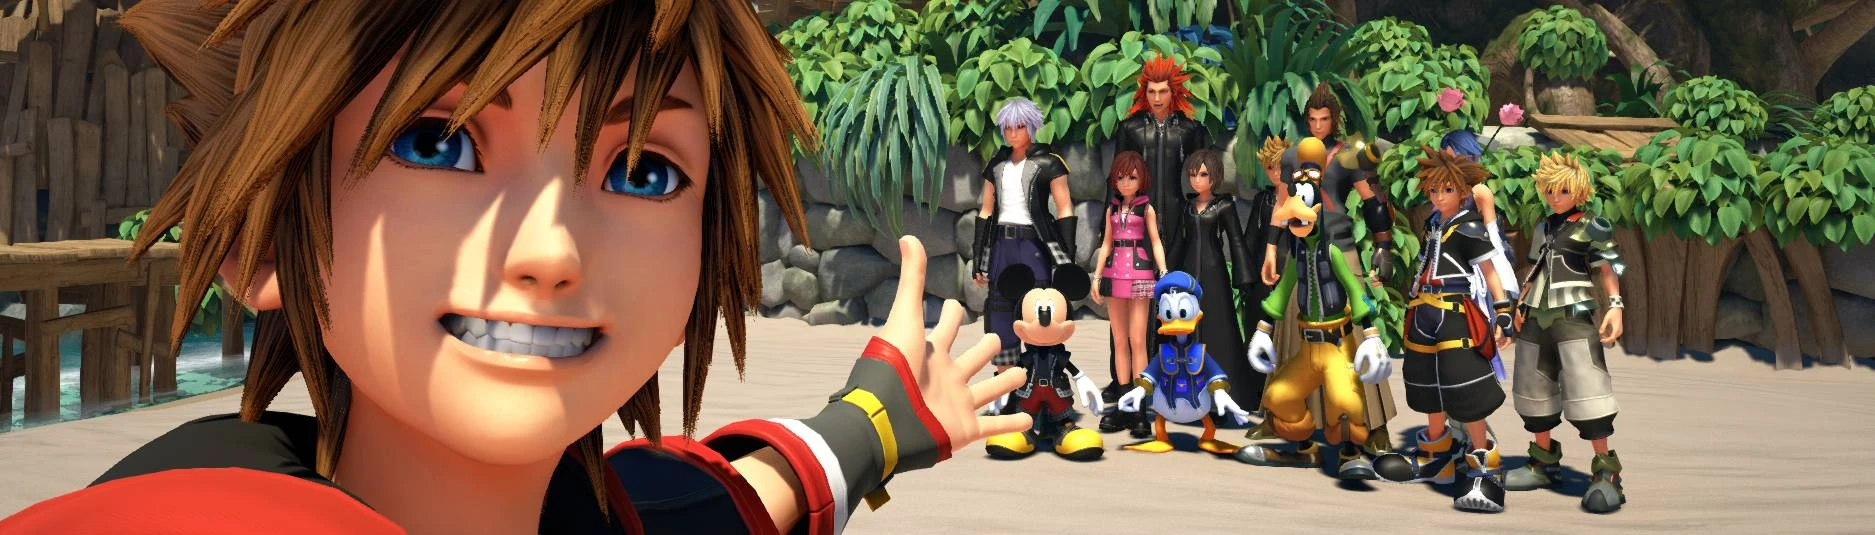 Cheat Table Kingdom Hearts III at Kingdom Hearts III Nexus - Mods and  community